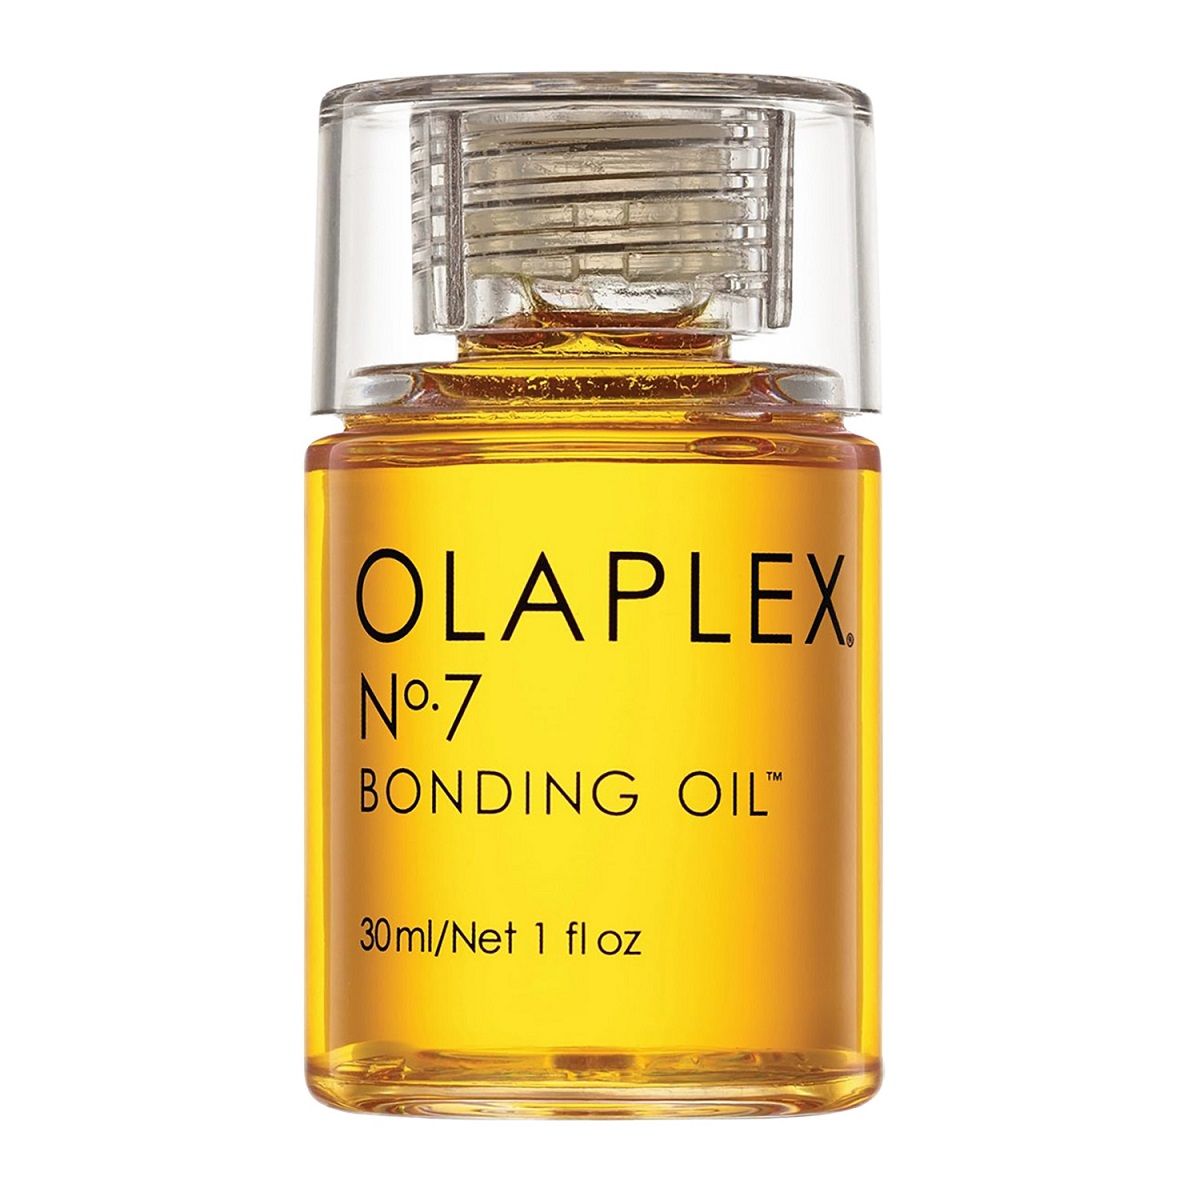 Olaplex No.7 Bonding Oil - Восстанавливающее масло "Капля совершенства" 30 мл Olaplex (США) купить по цене 2 640 руб.